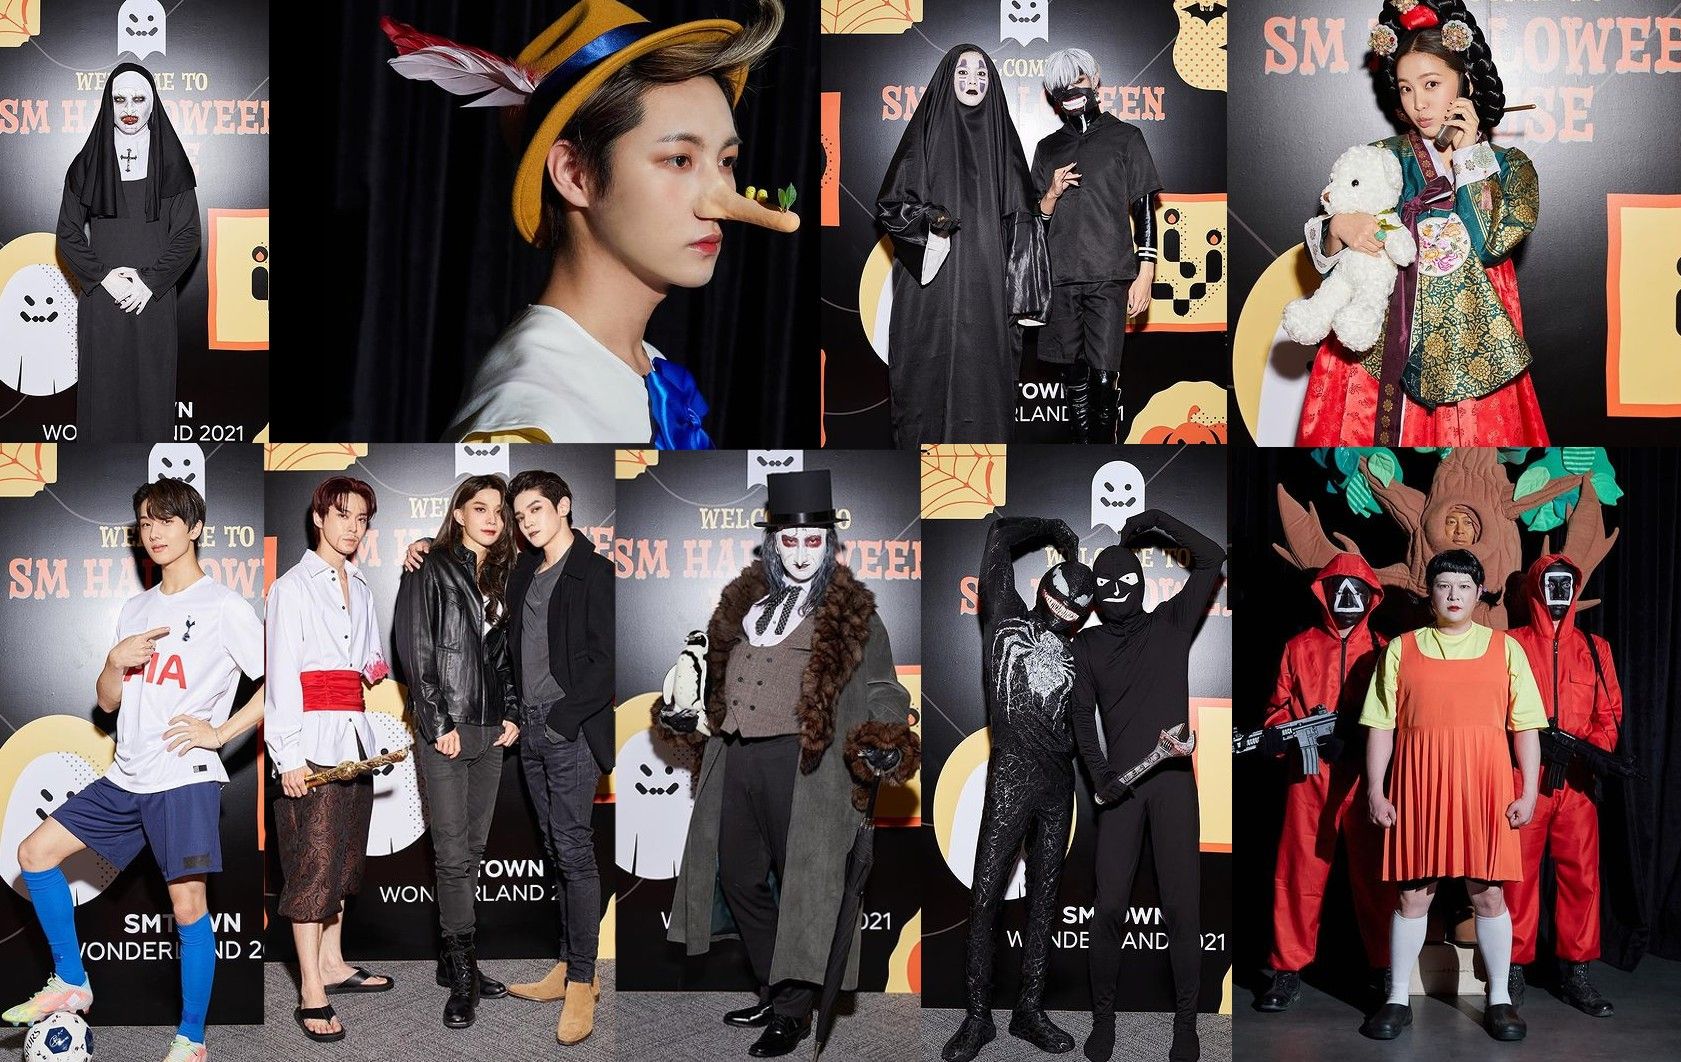  Pesta Halloween SM Entertainment / Instagram @smtown